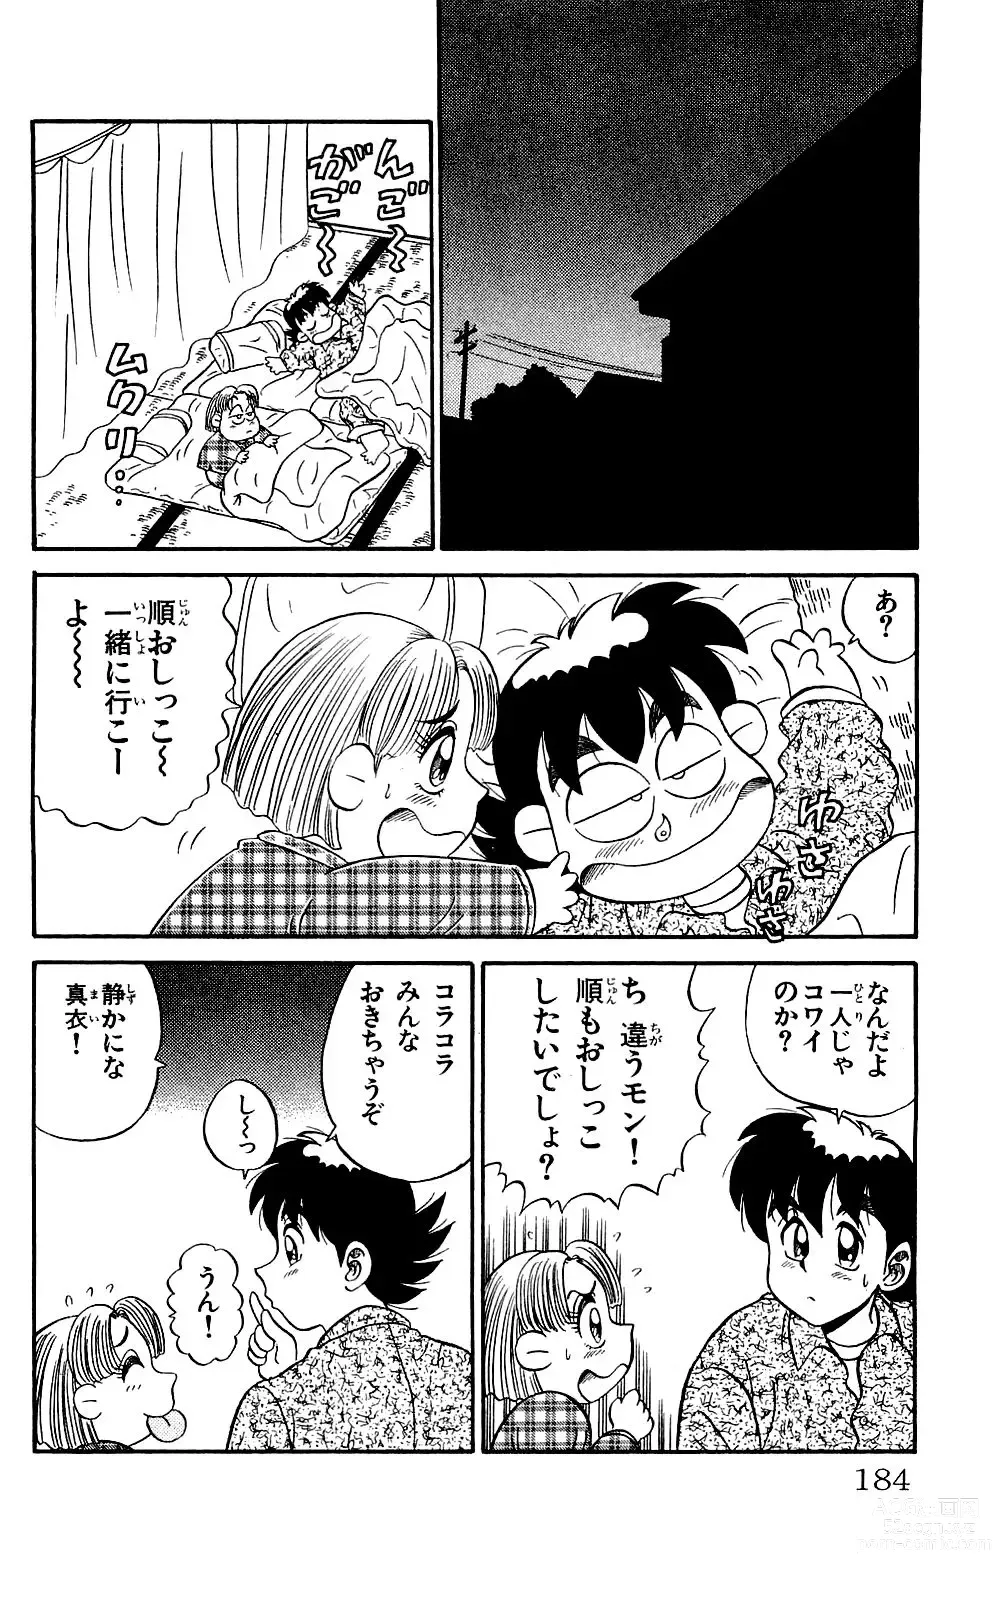 Page 182 of manga Orette Piyoritan Vol. 2